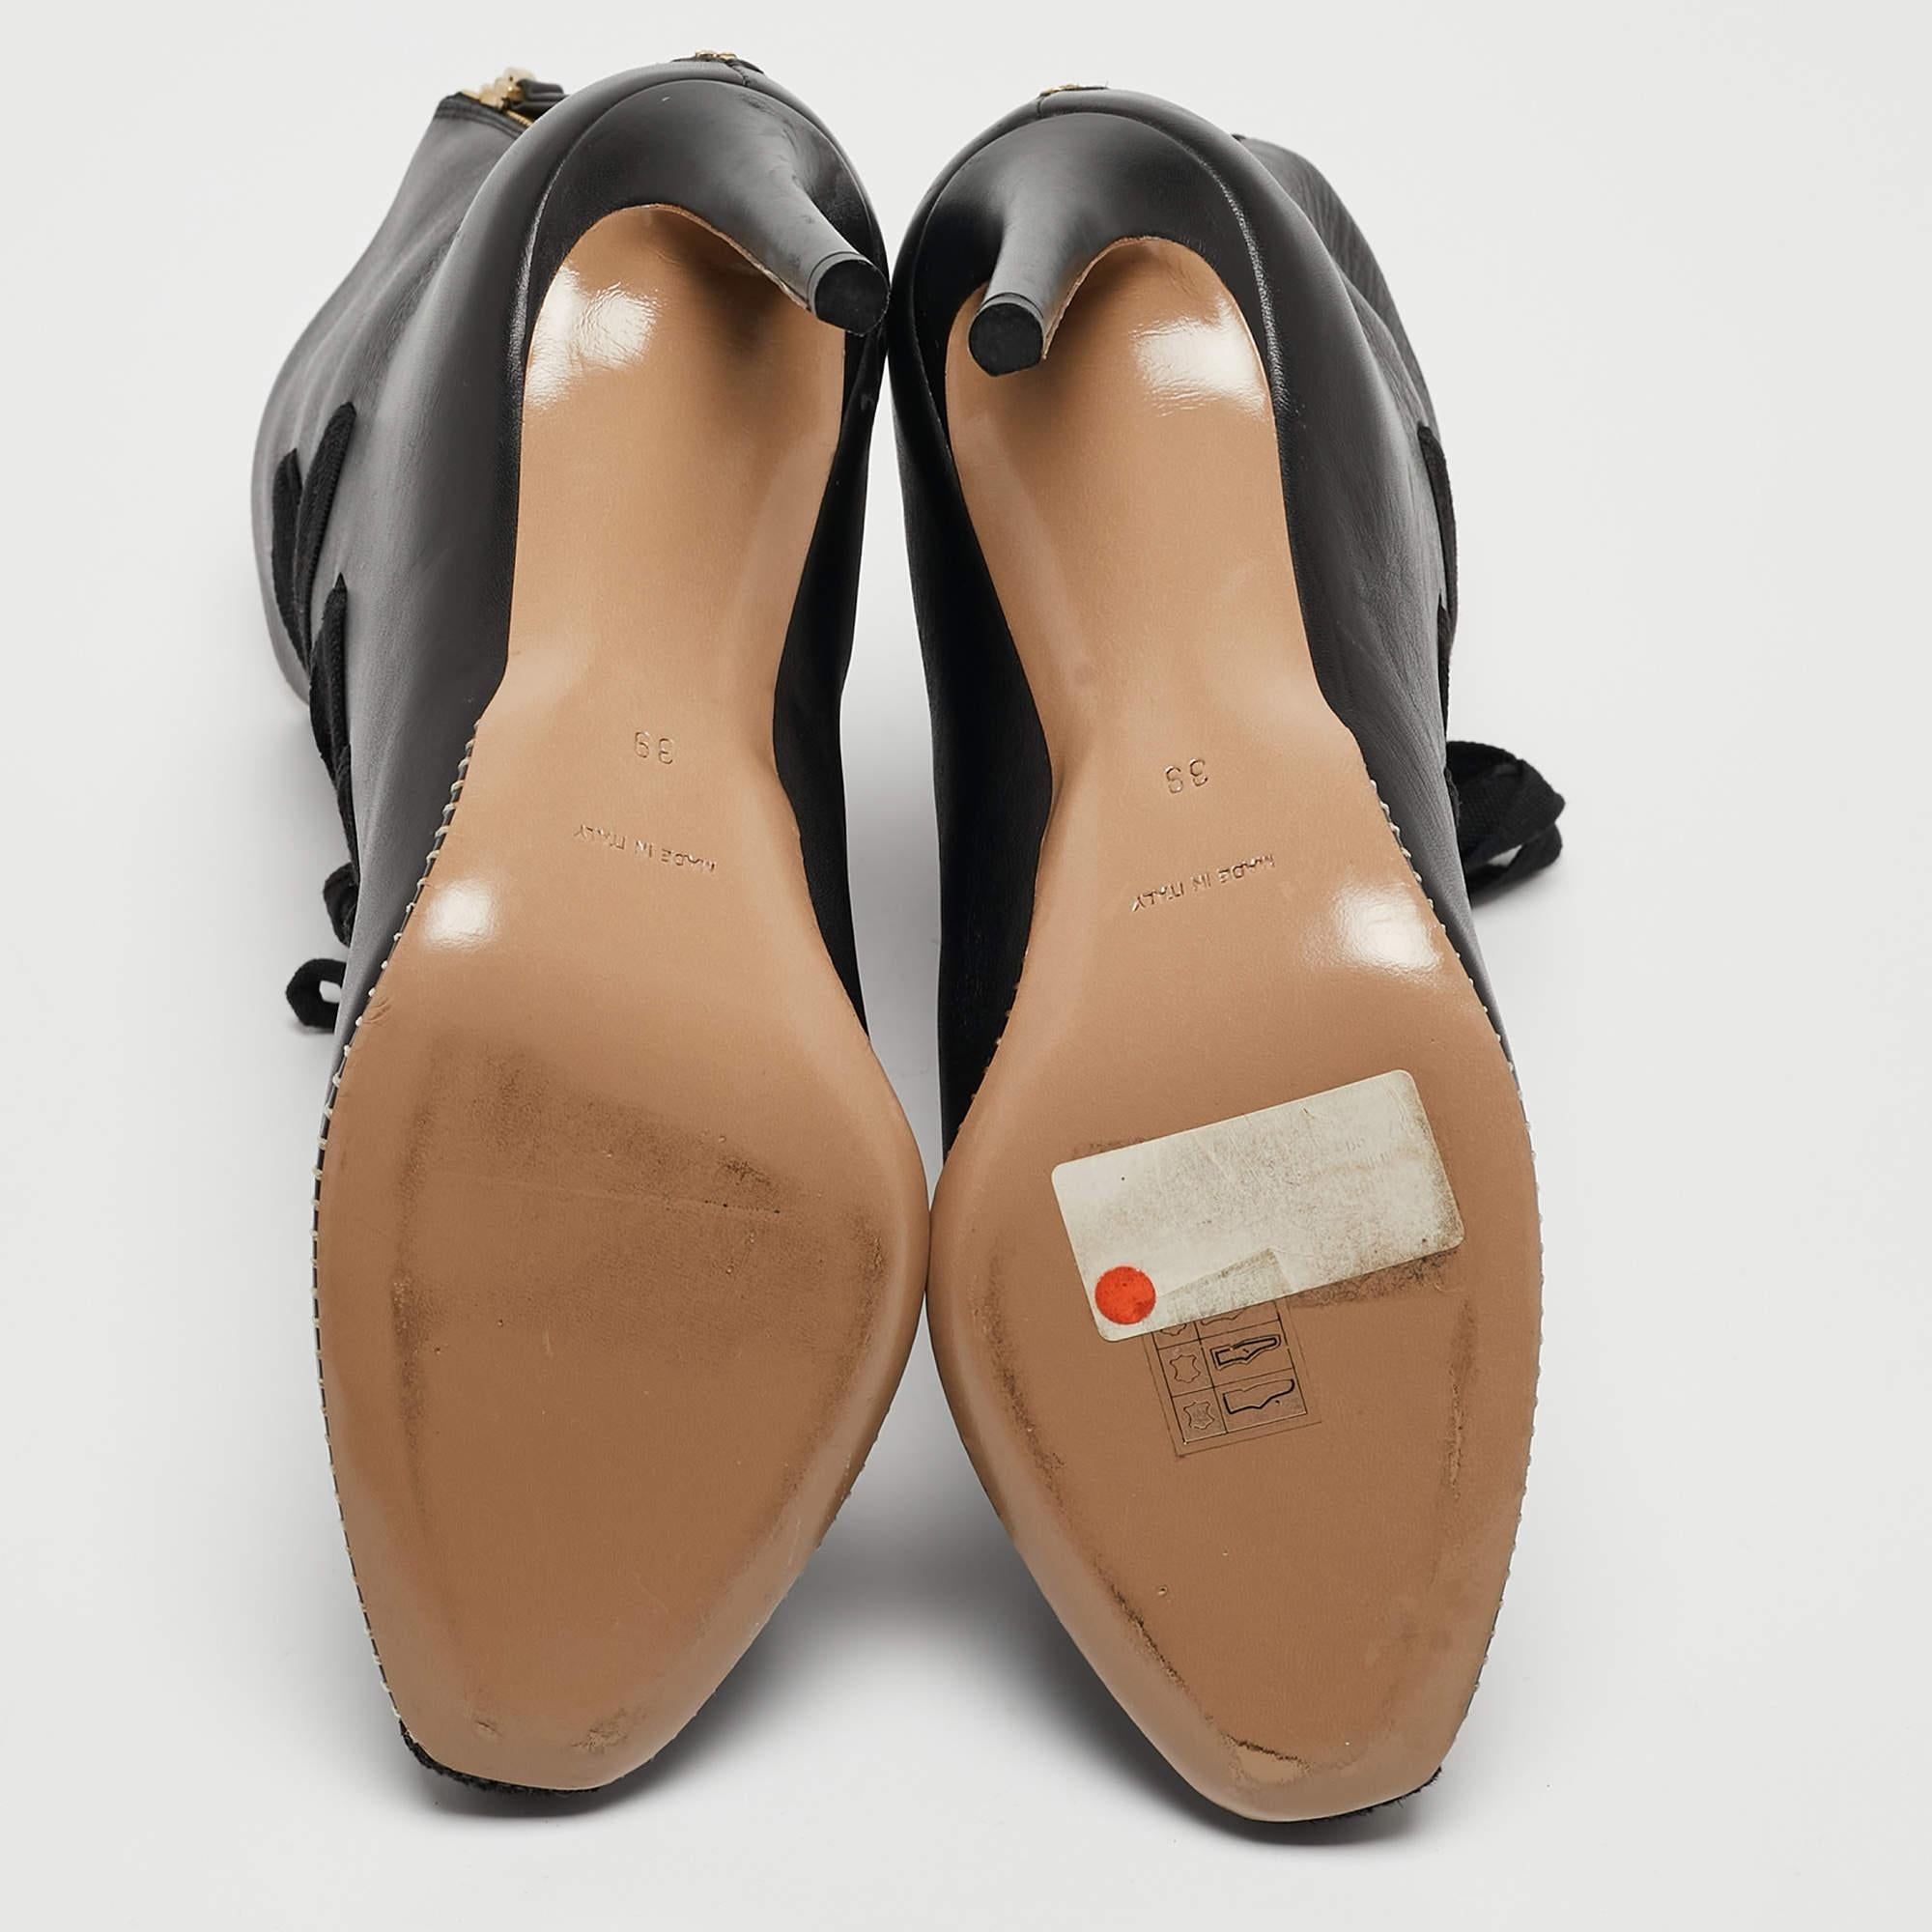 Altuzarra Black Leather Ankle Boots Size 39 For Sale 3